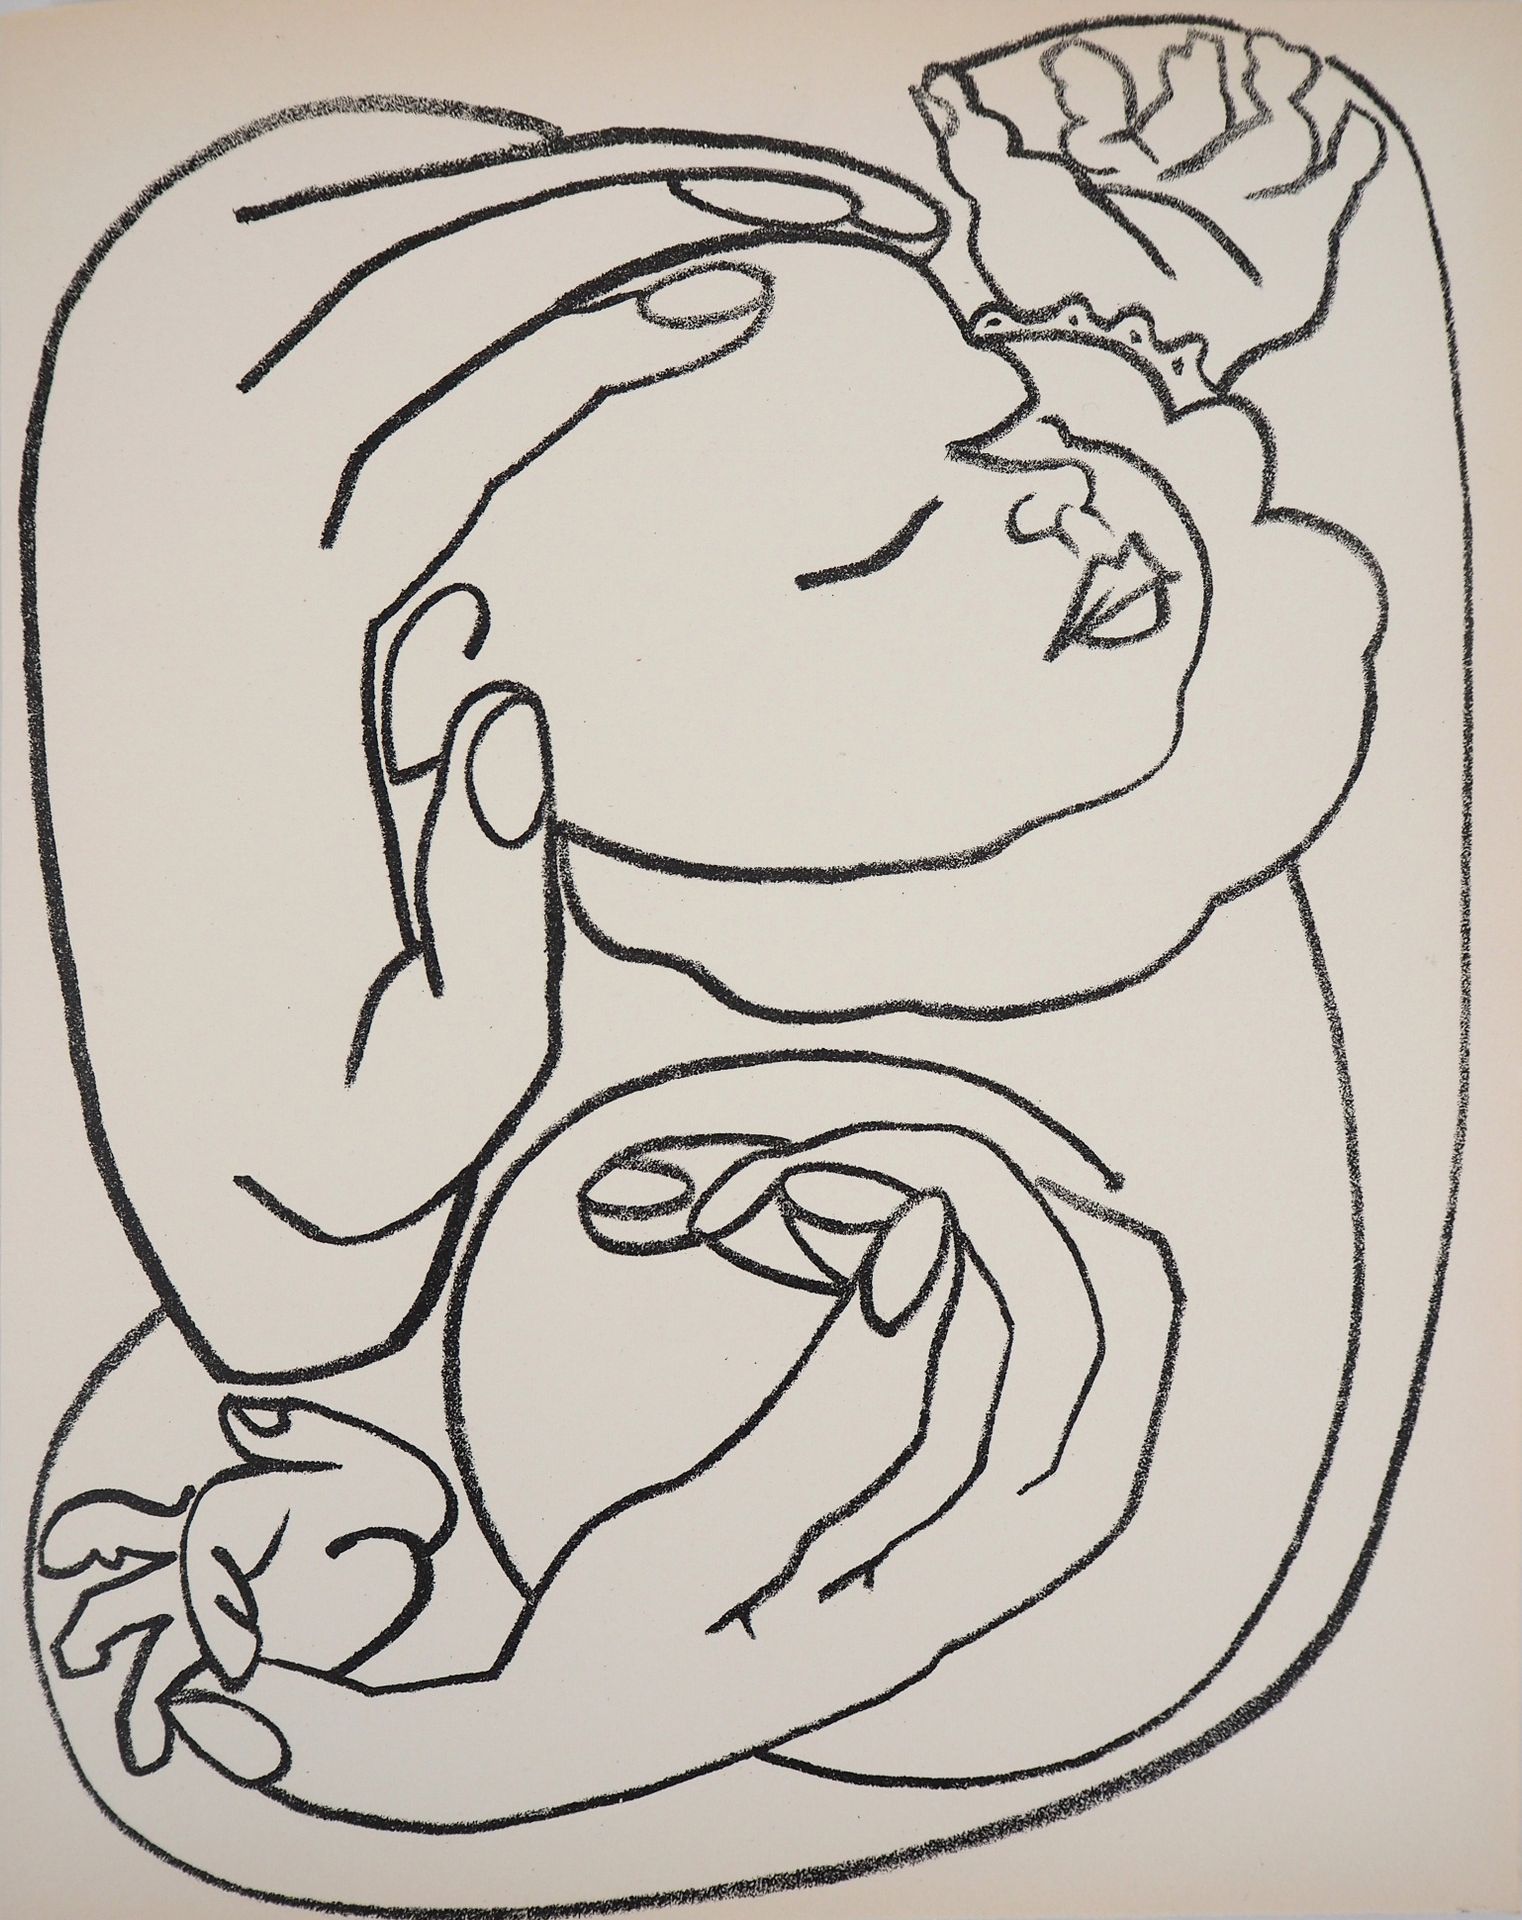 FRANÇOISE GILOT 弗朗索瓦丝-吉洛特 (1921)

妇产科, 1951

原始石版画

马莱梭织纸上 28 x 22.5 cm

印刷了366份&hellip;